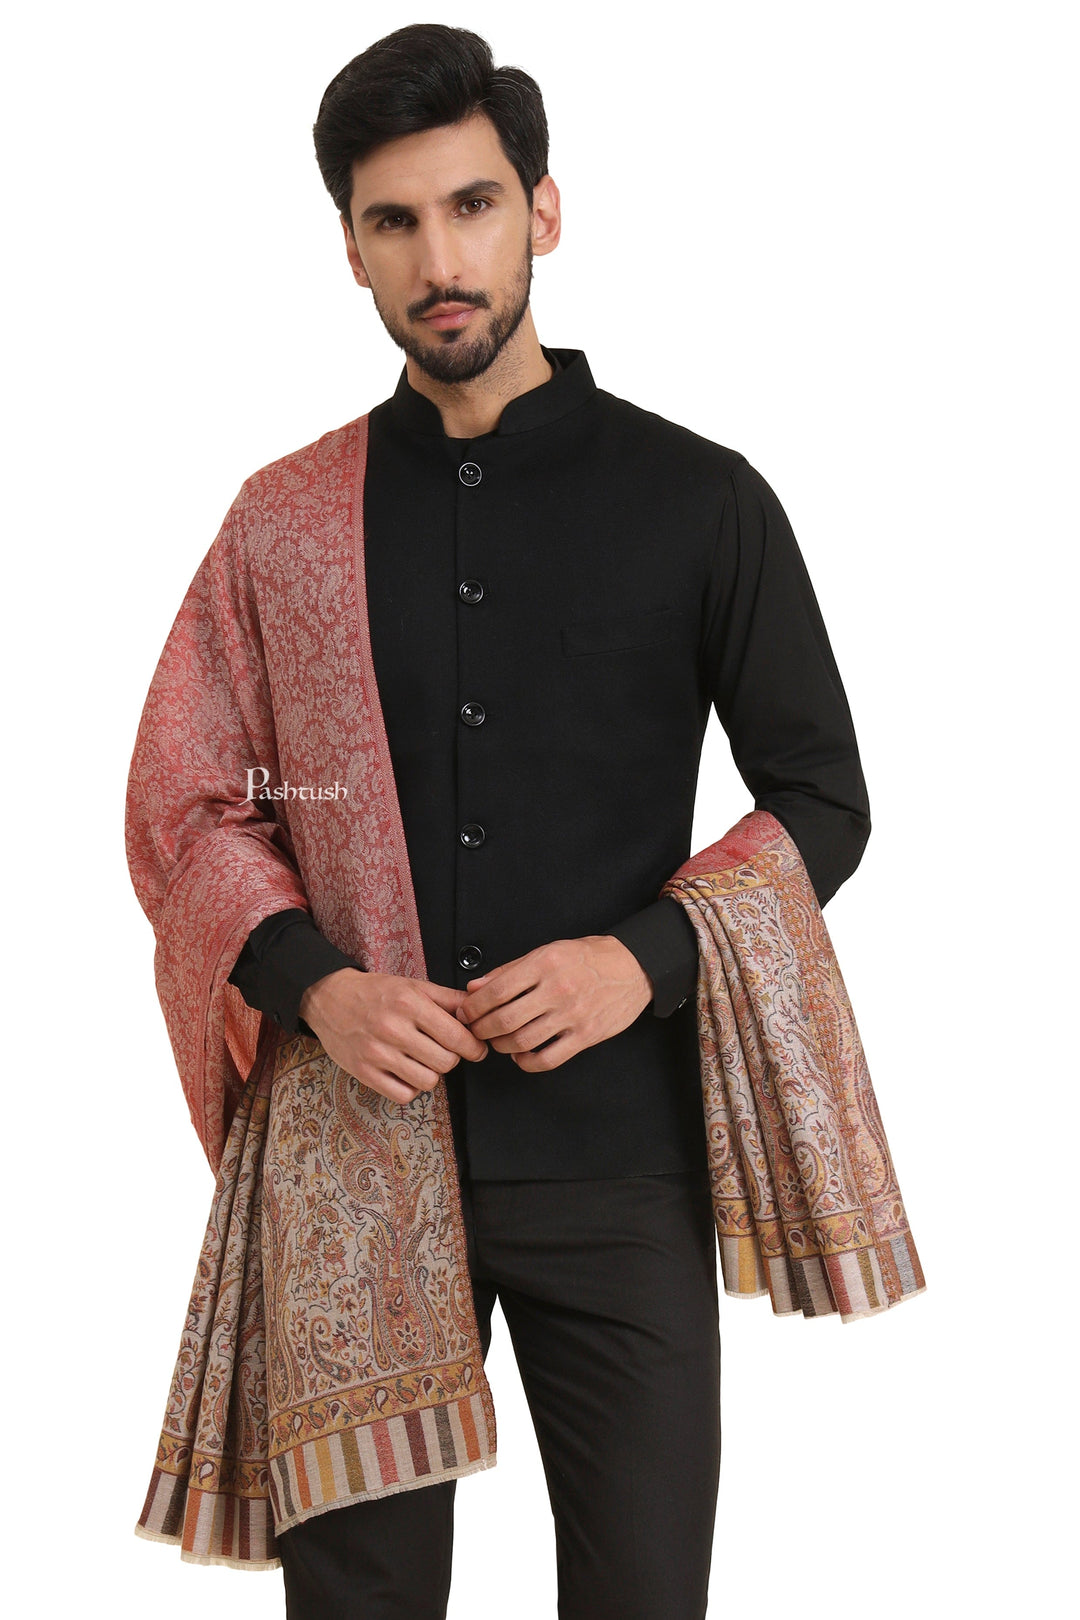 Pashtush India Mens Scarves Stoles and Mufflers Pashtush Mens Extra Fine Wool Stole, Paisley Weave Design, Maroon